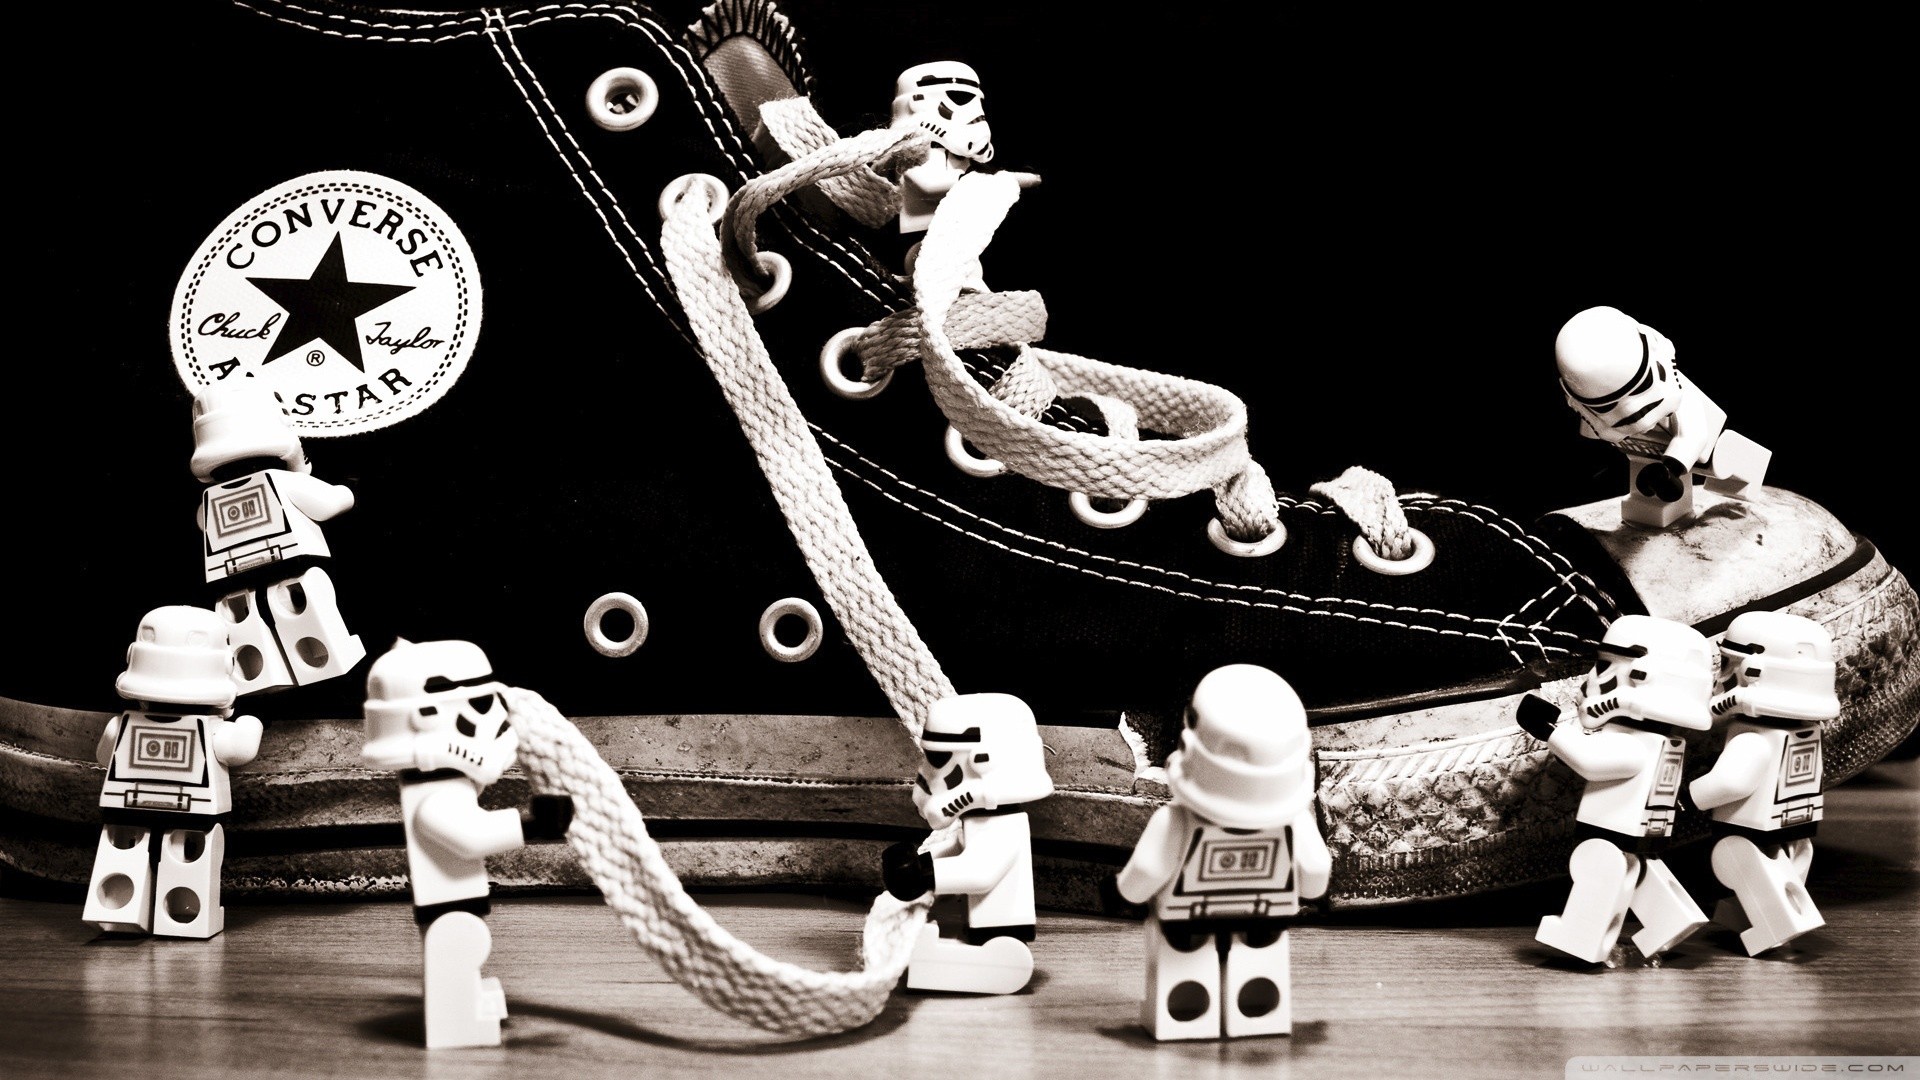 Converse Shoes Stormtrooper LEGO Star Wars Star Wars Humor 1920x1080